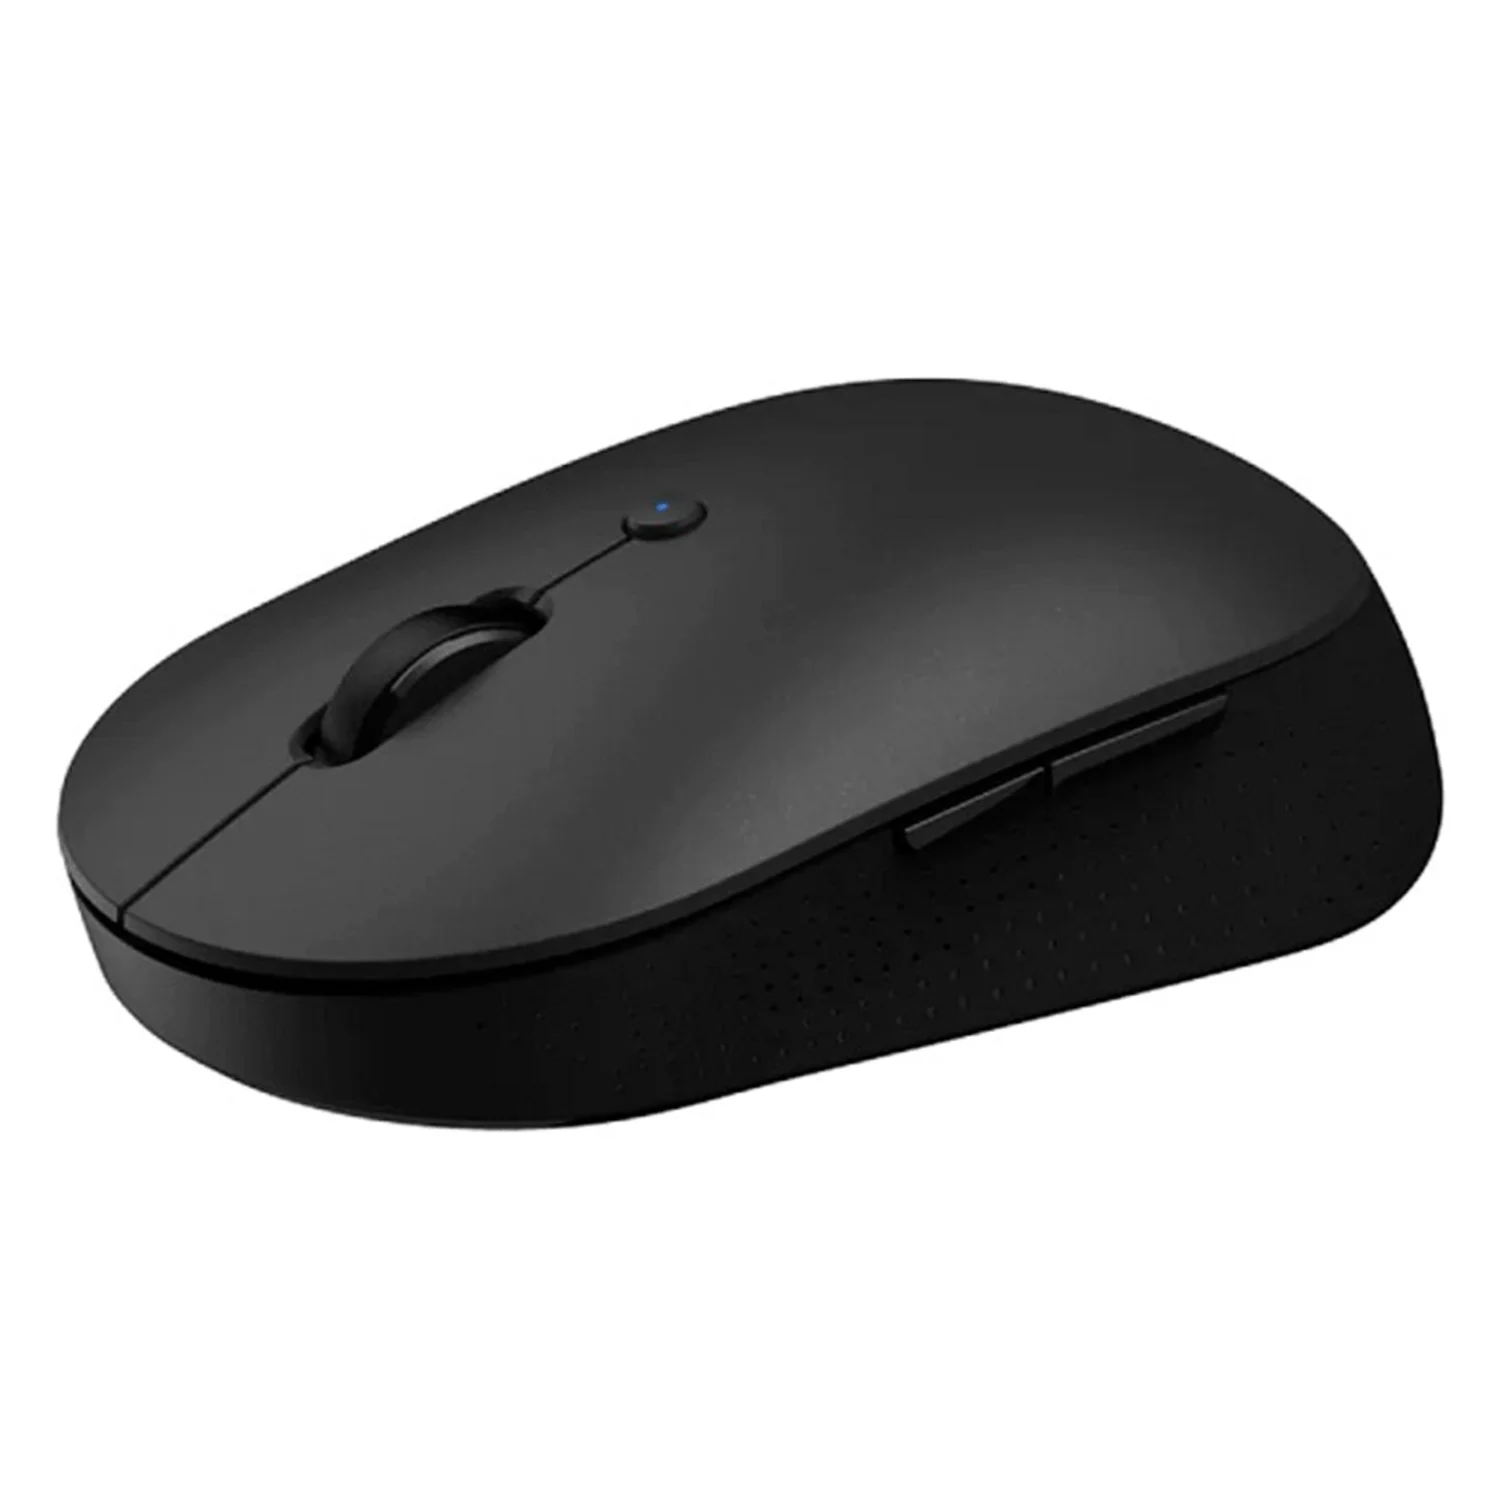 Mouse Xiaomi Mi Dual Mode Wireless Silent Edition - Preto